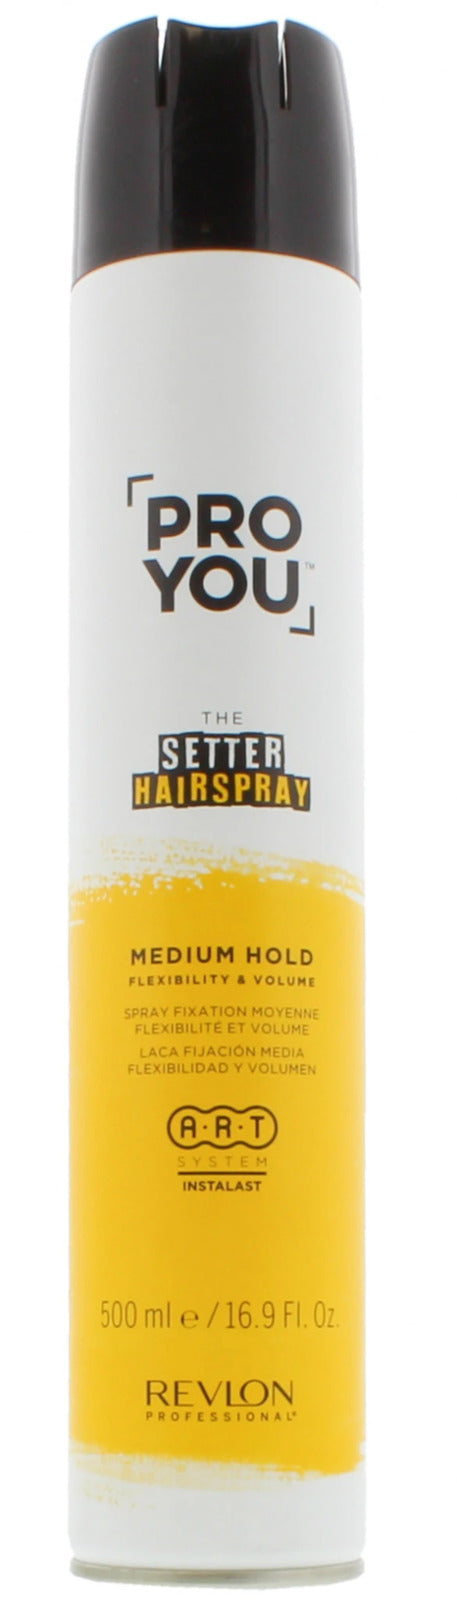 Revlon: Professional Pro You Hairspray The Setter - Medium (500ml)